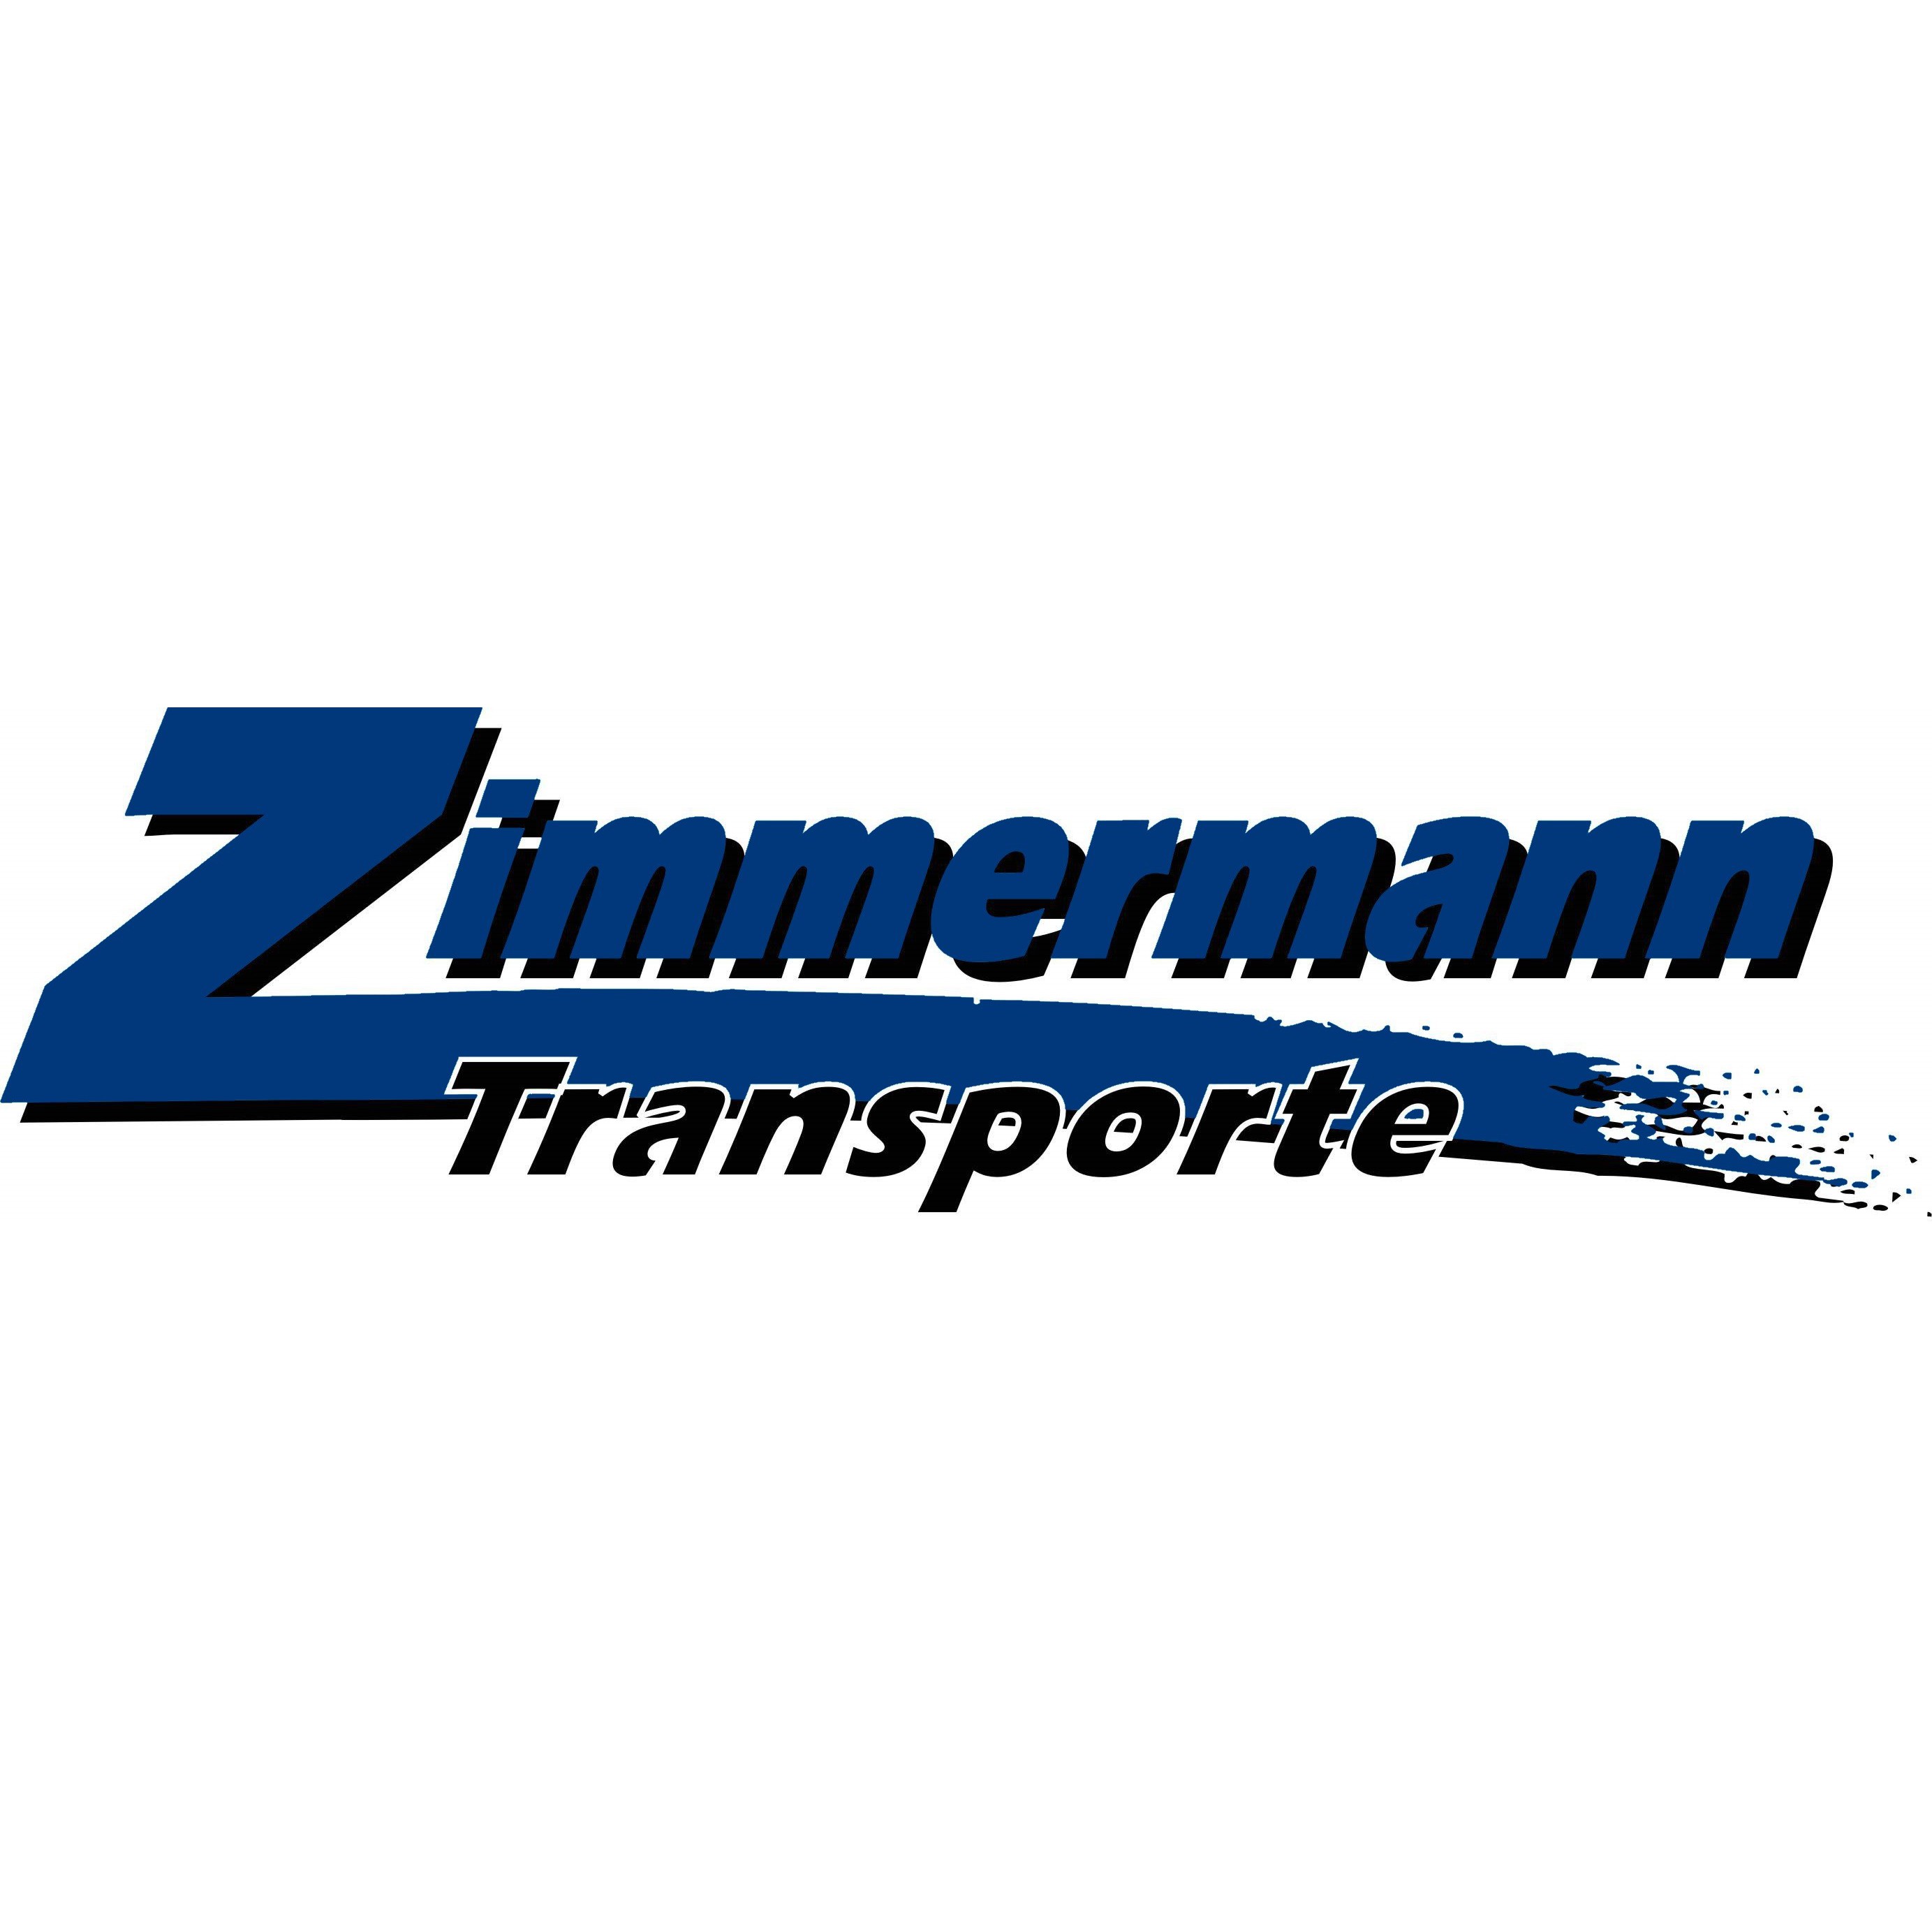 Zimmermann Transporte Logo